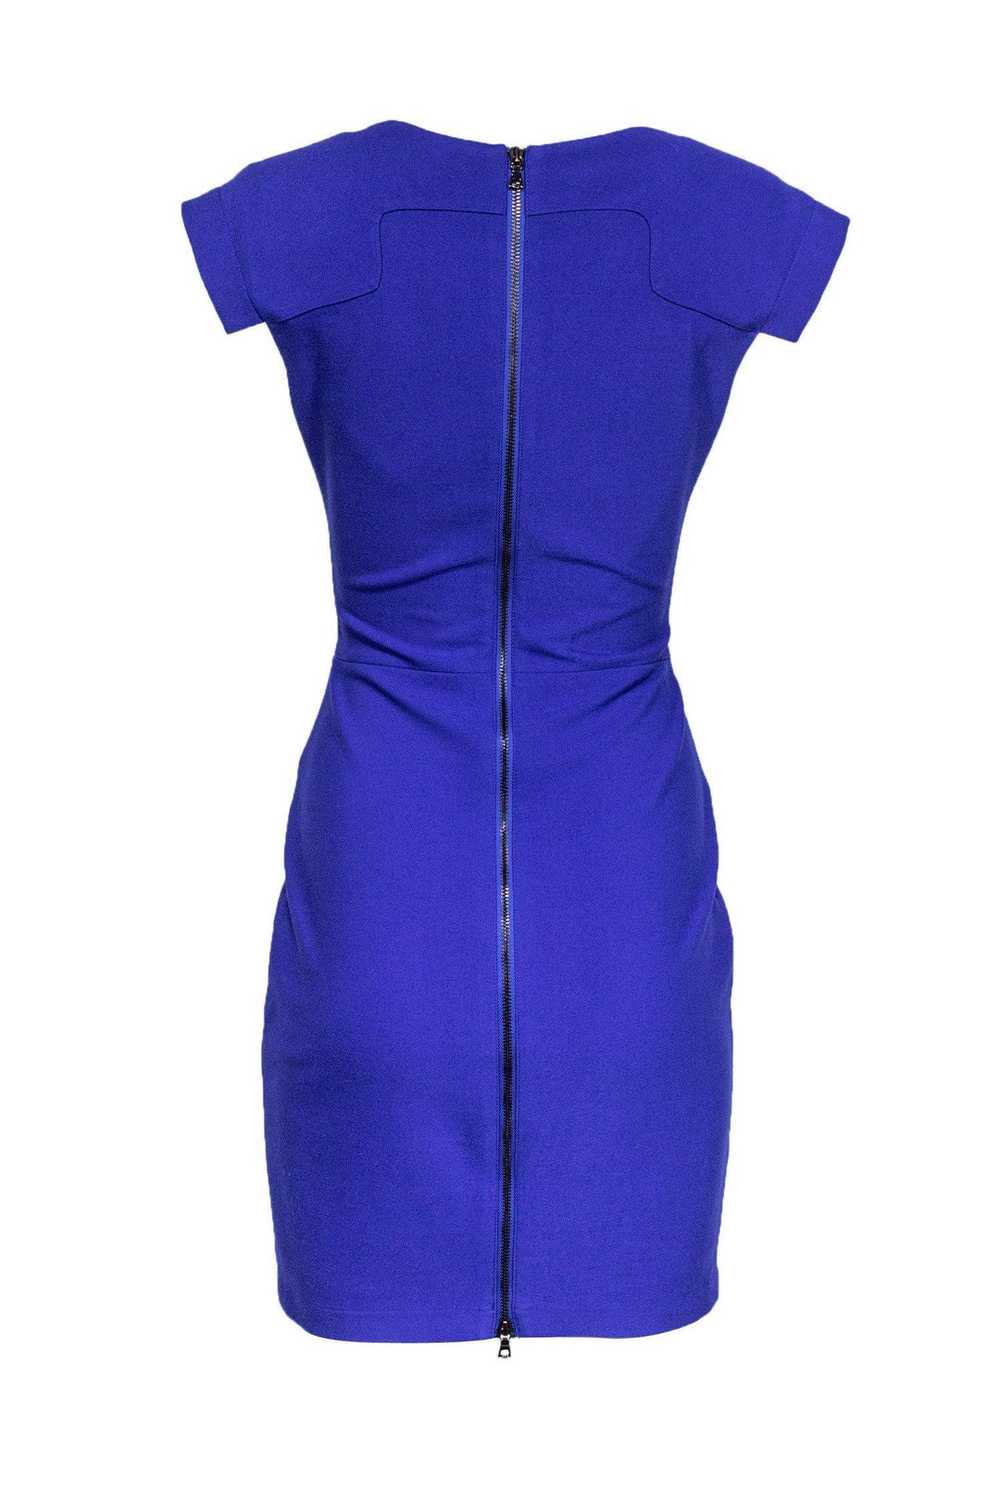 Robert Rodriguez - Blue Cap Sleeve Sheath Dress S… - image 3